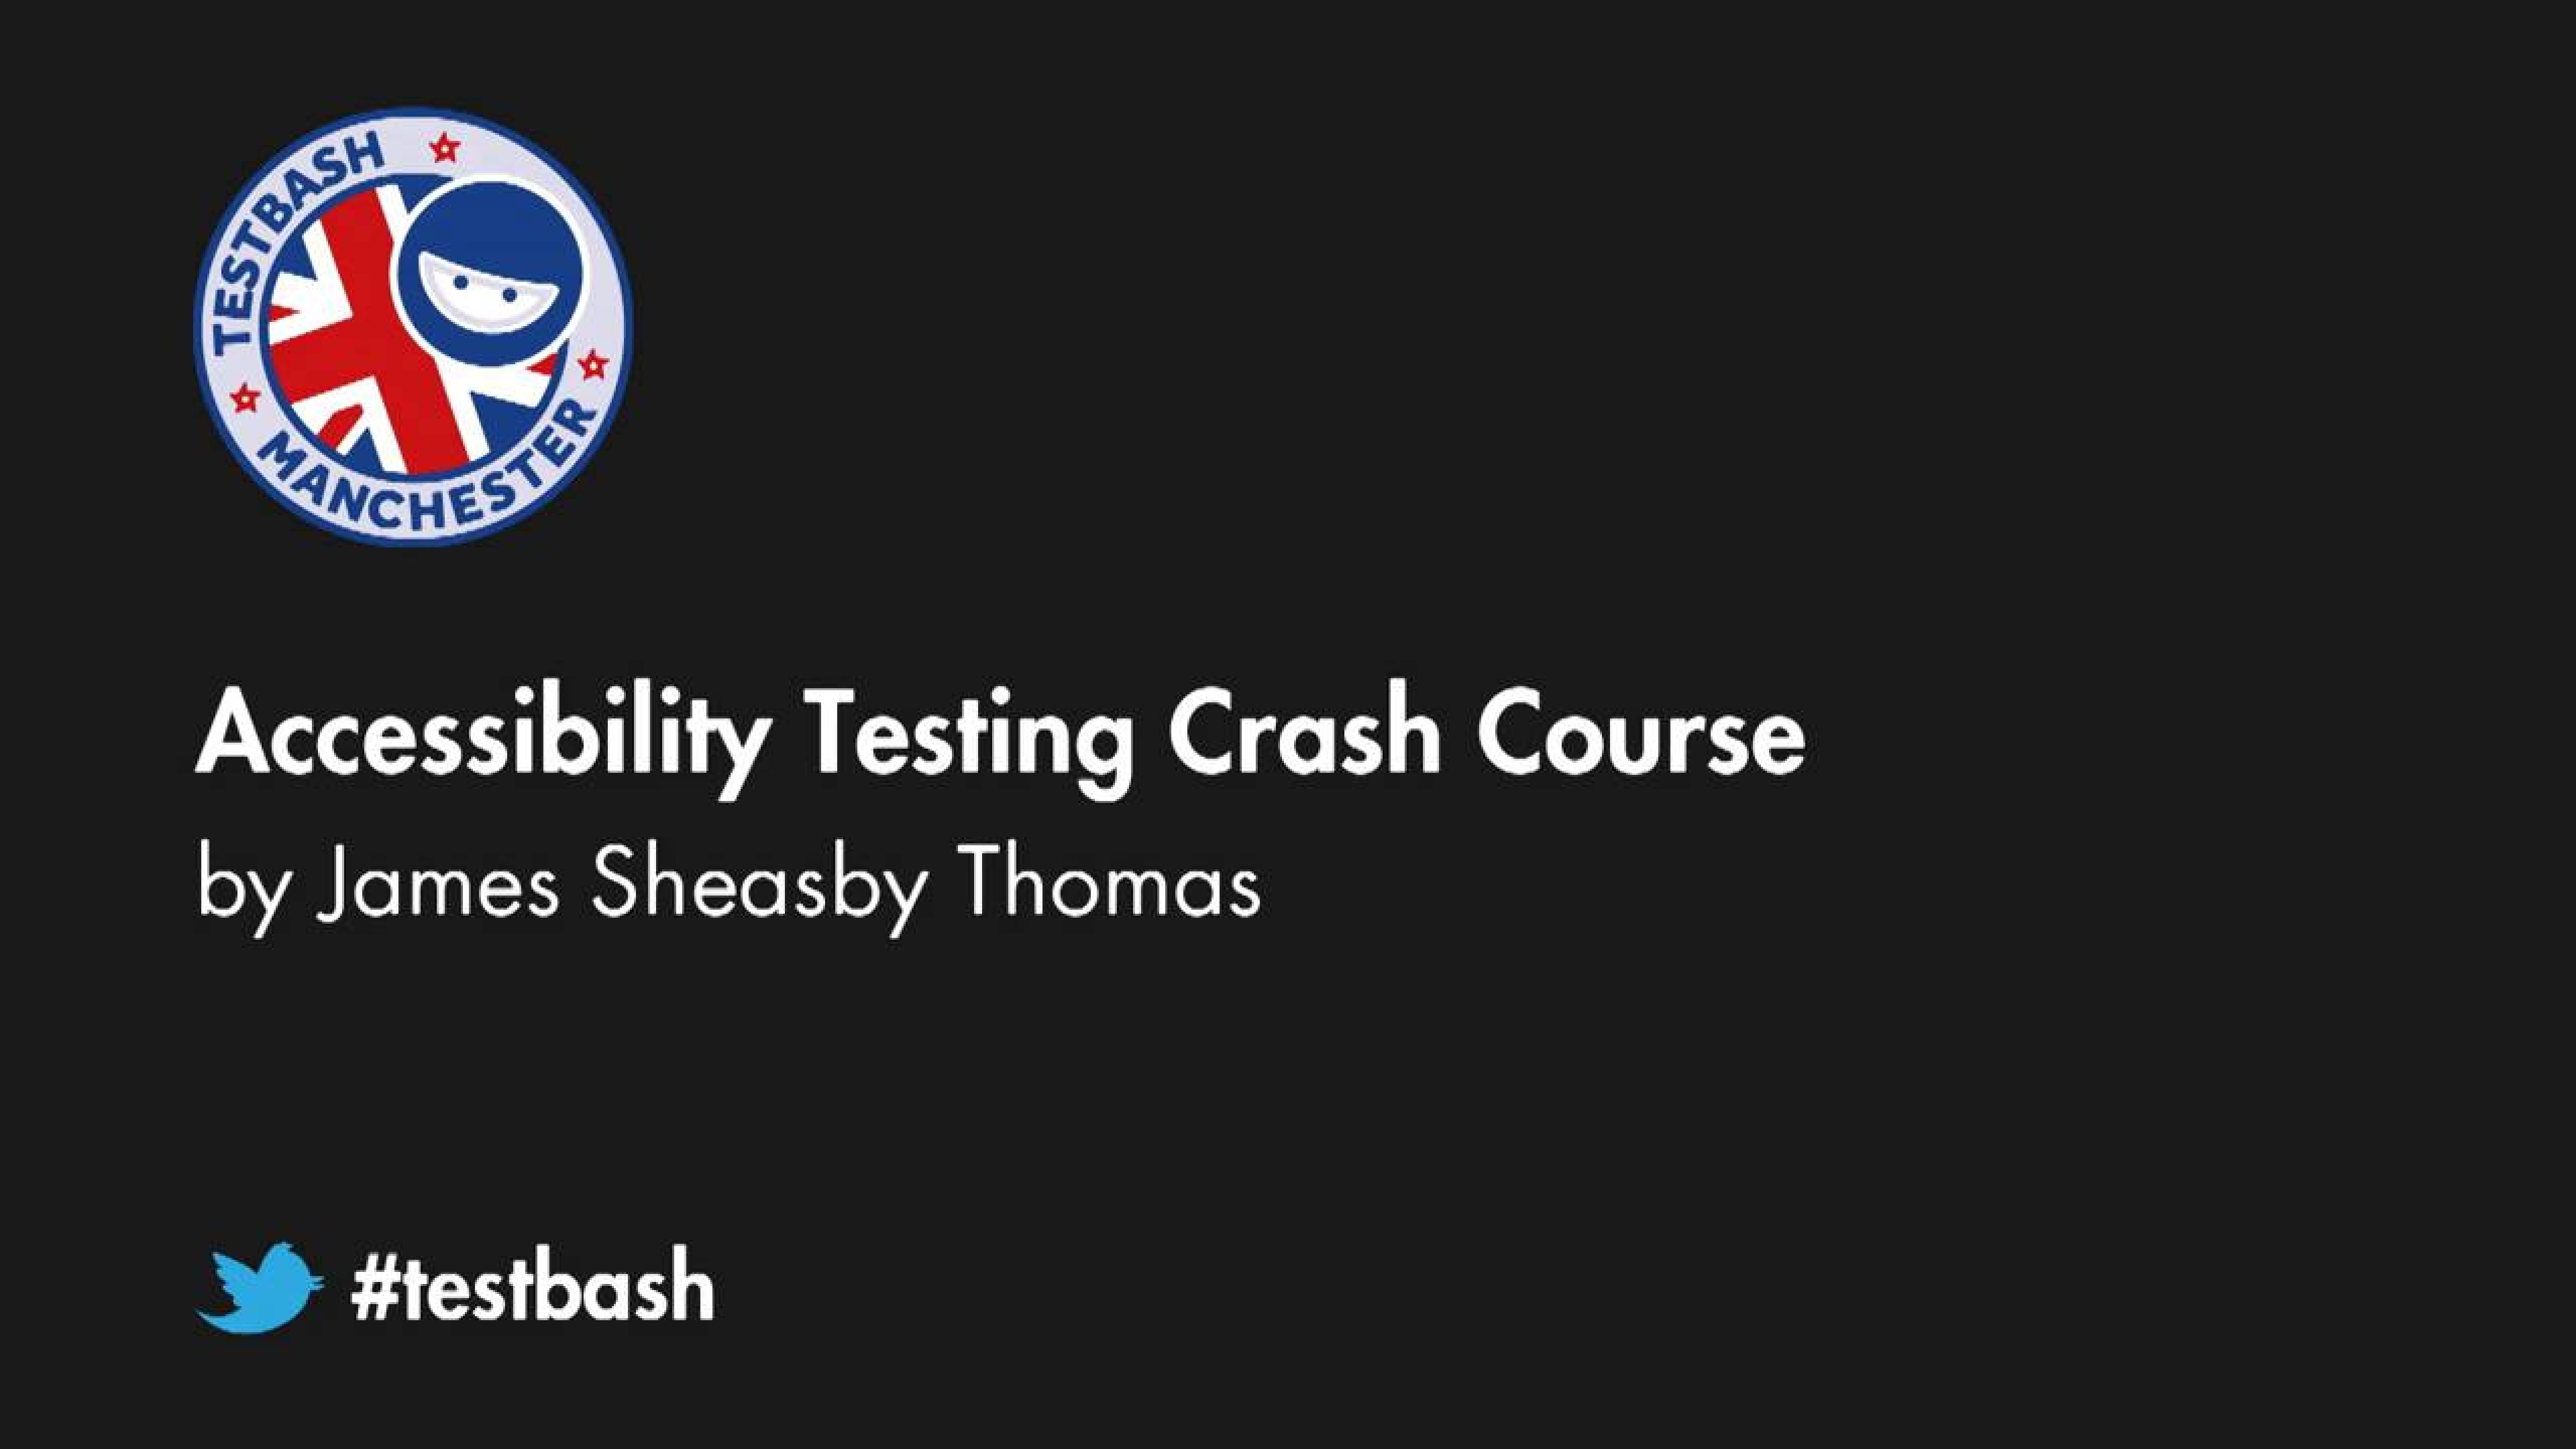 Accessibility Testing Crash Course - James Sheasby Thomas